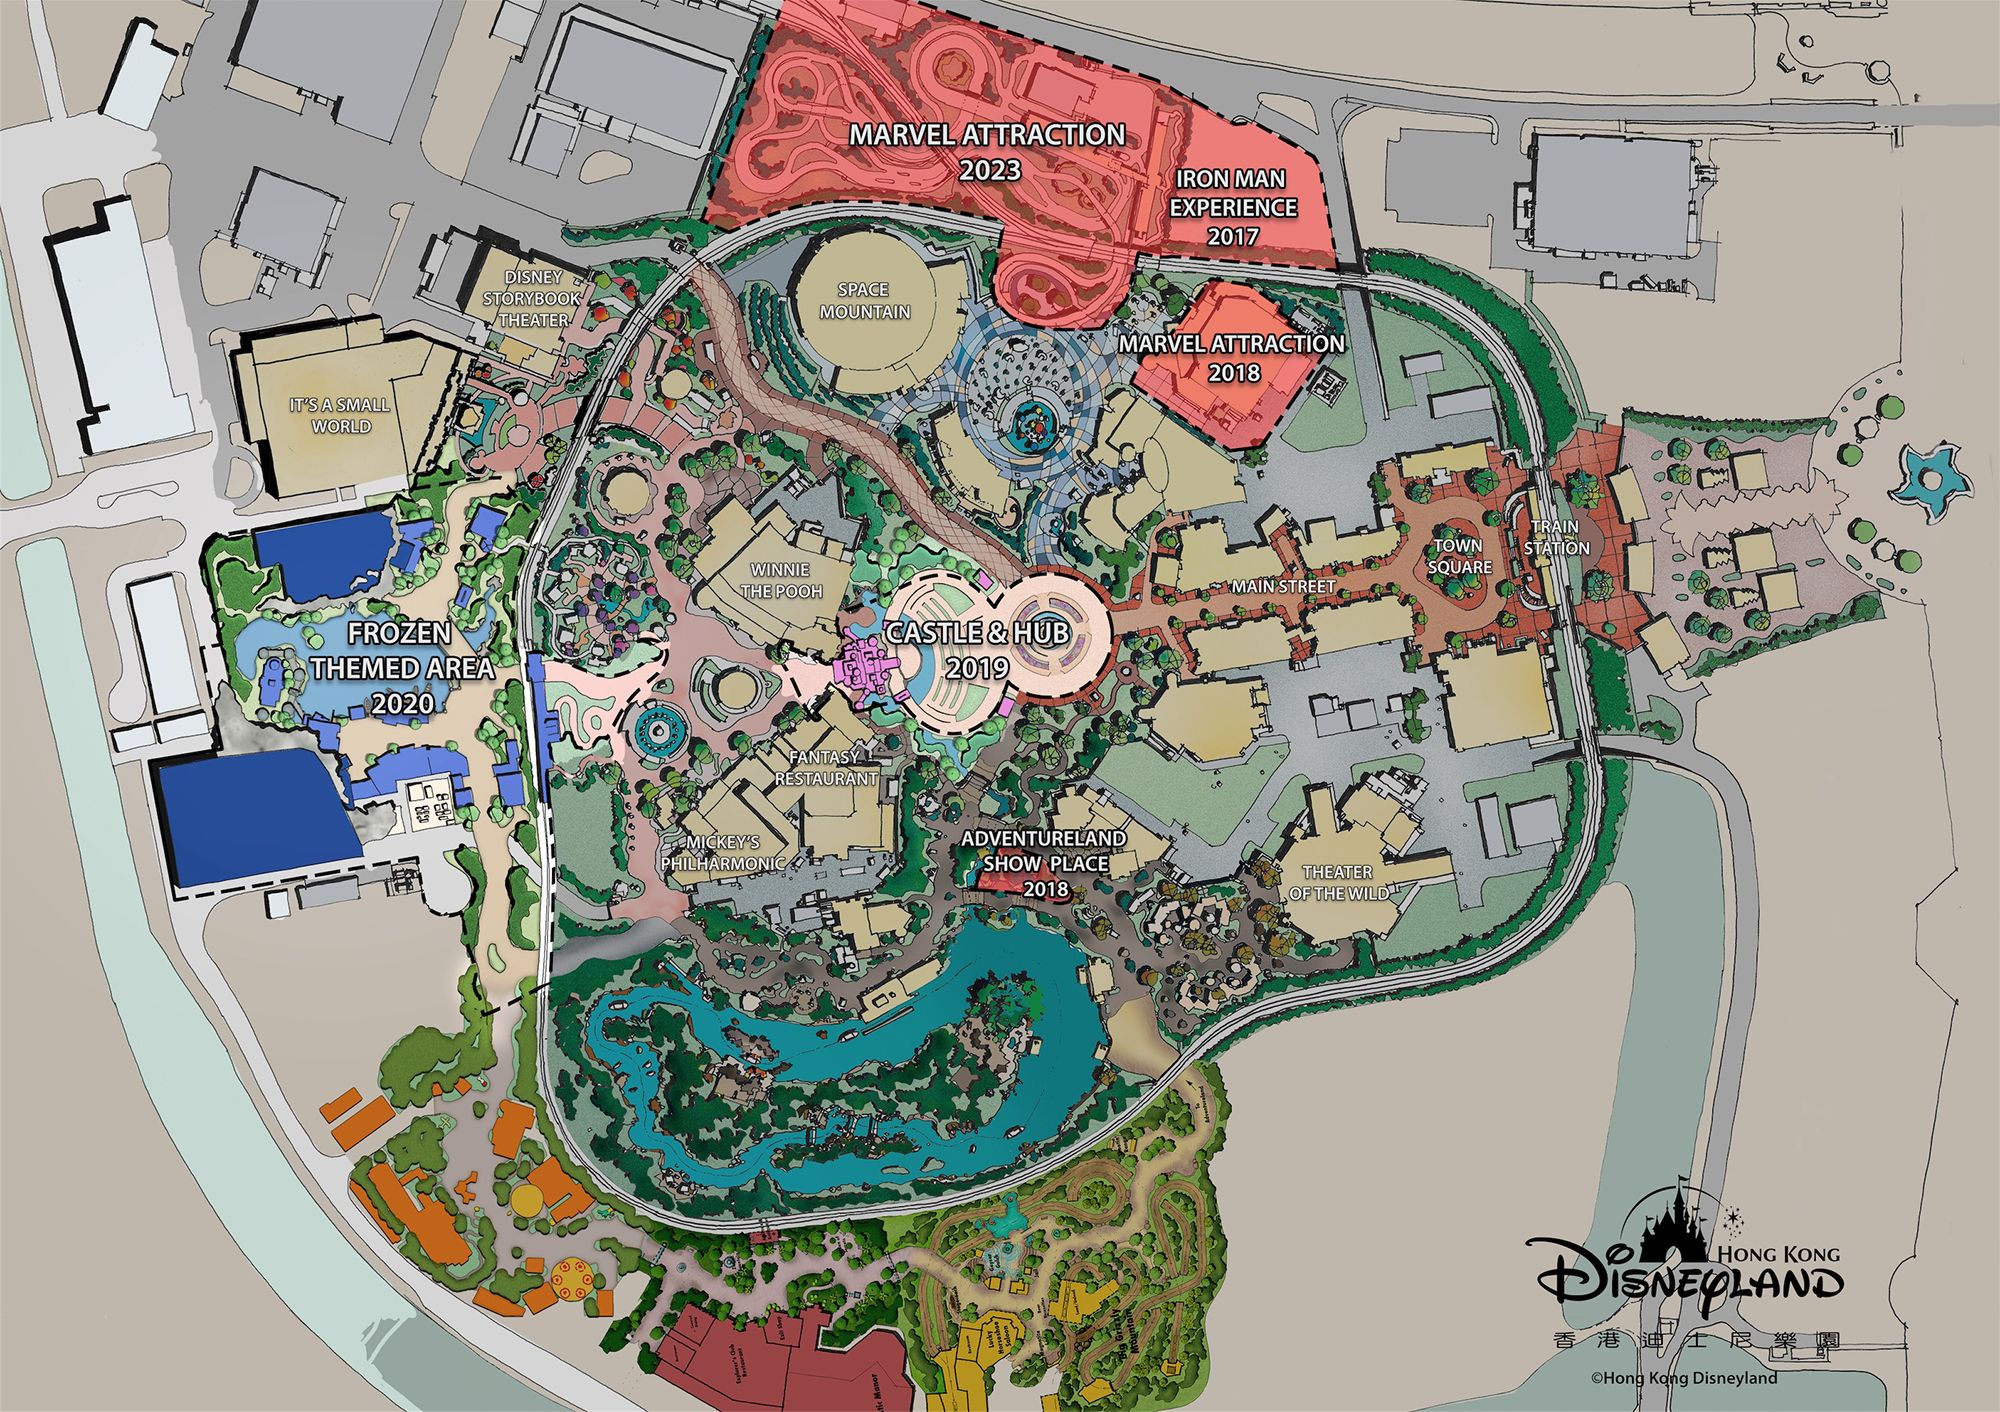 Hong Kong Disneyland Expansion plans